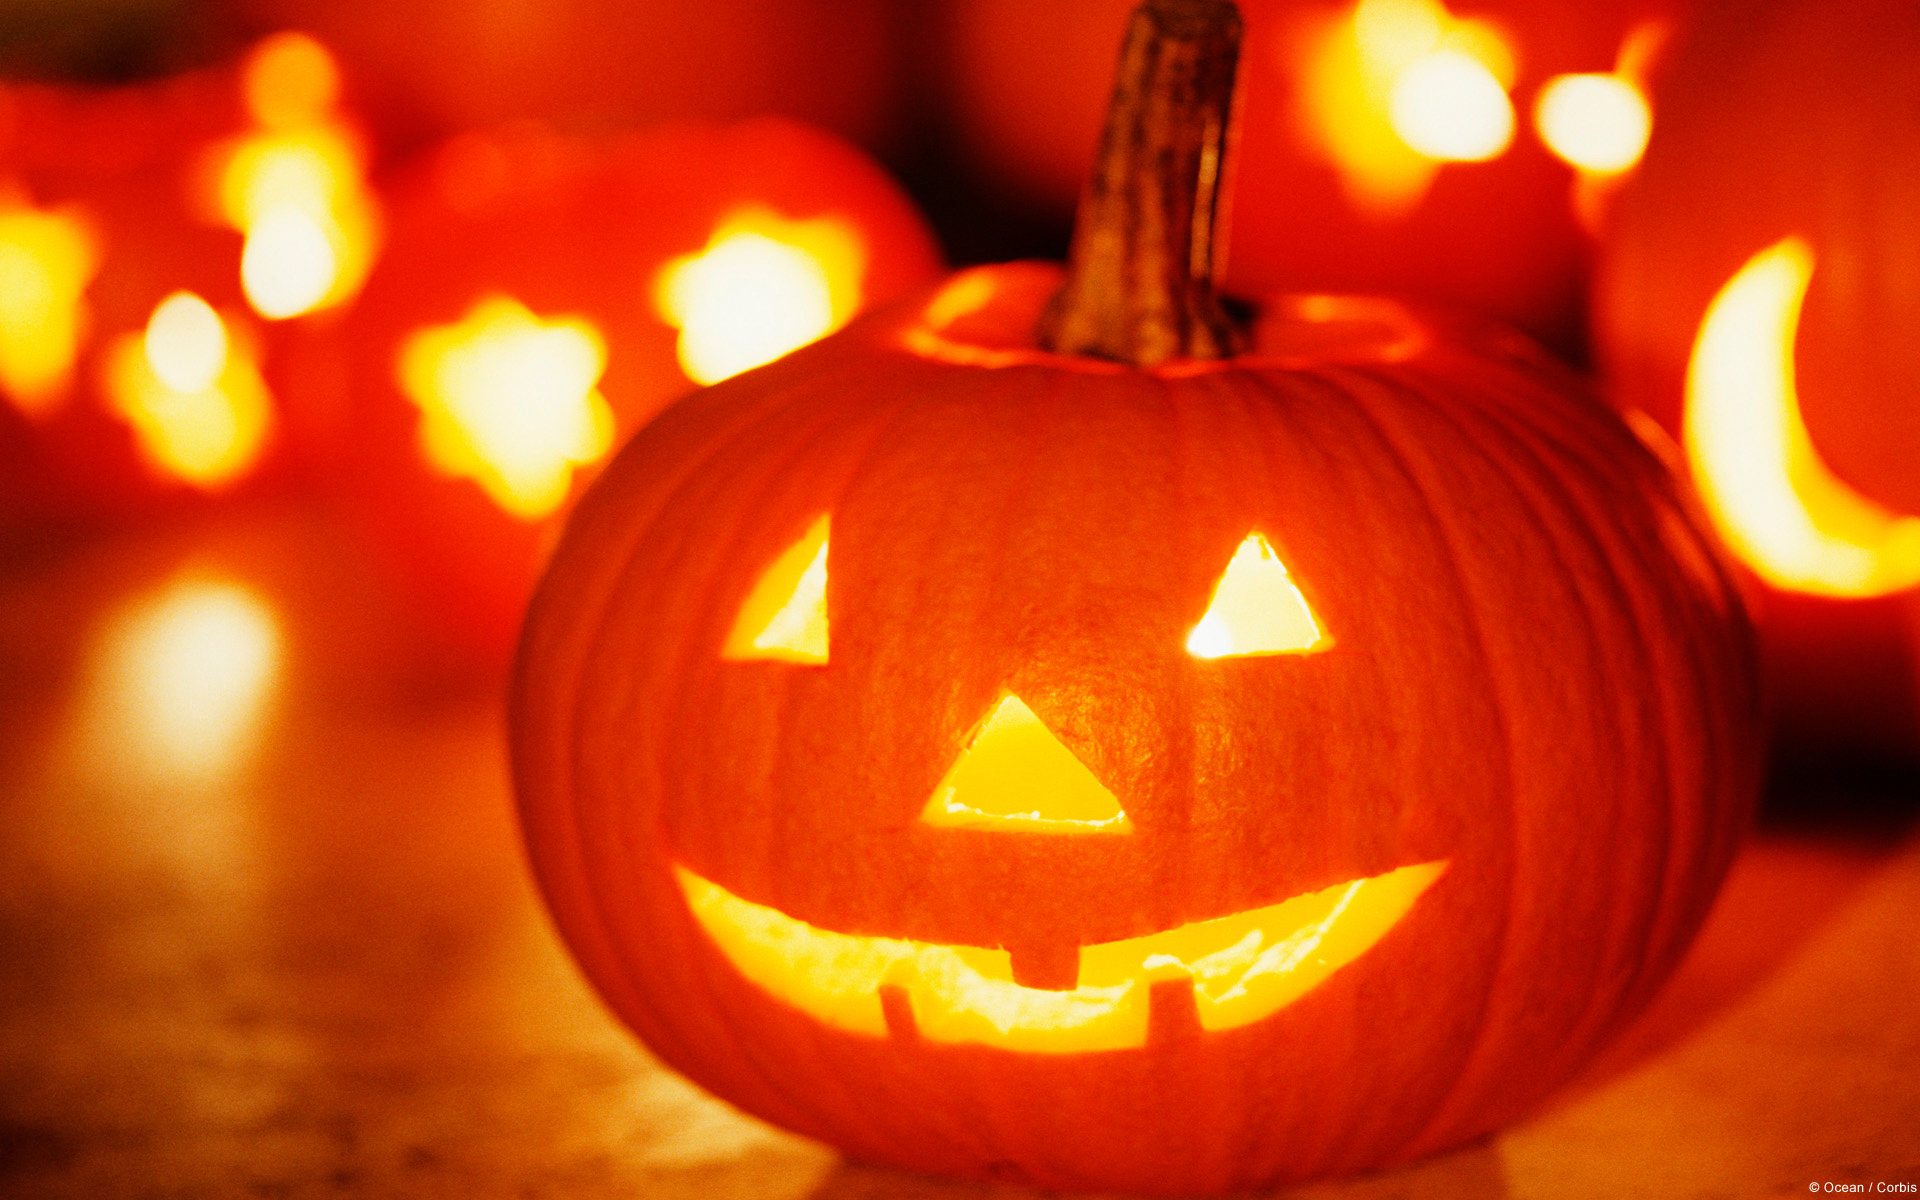 Ideas to plan a killer “Halloween Party”